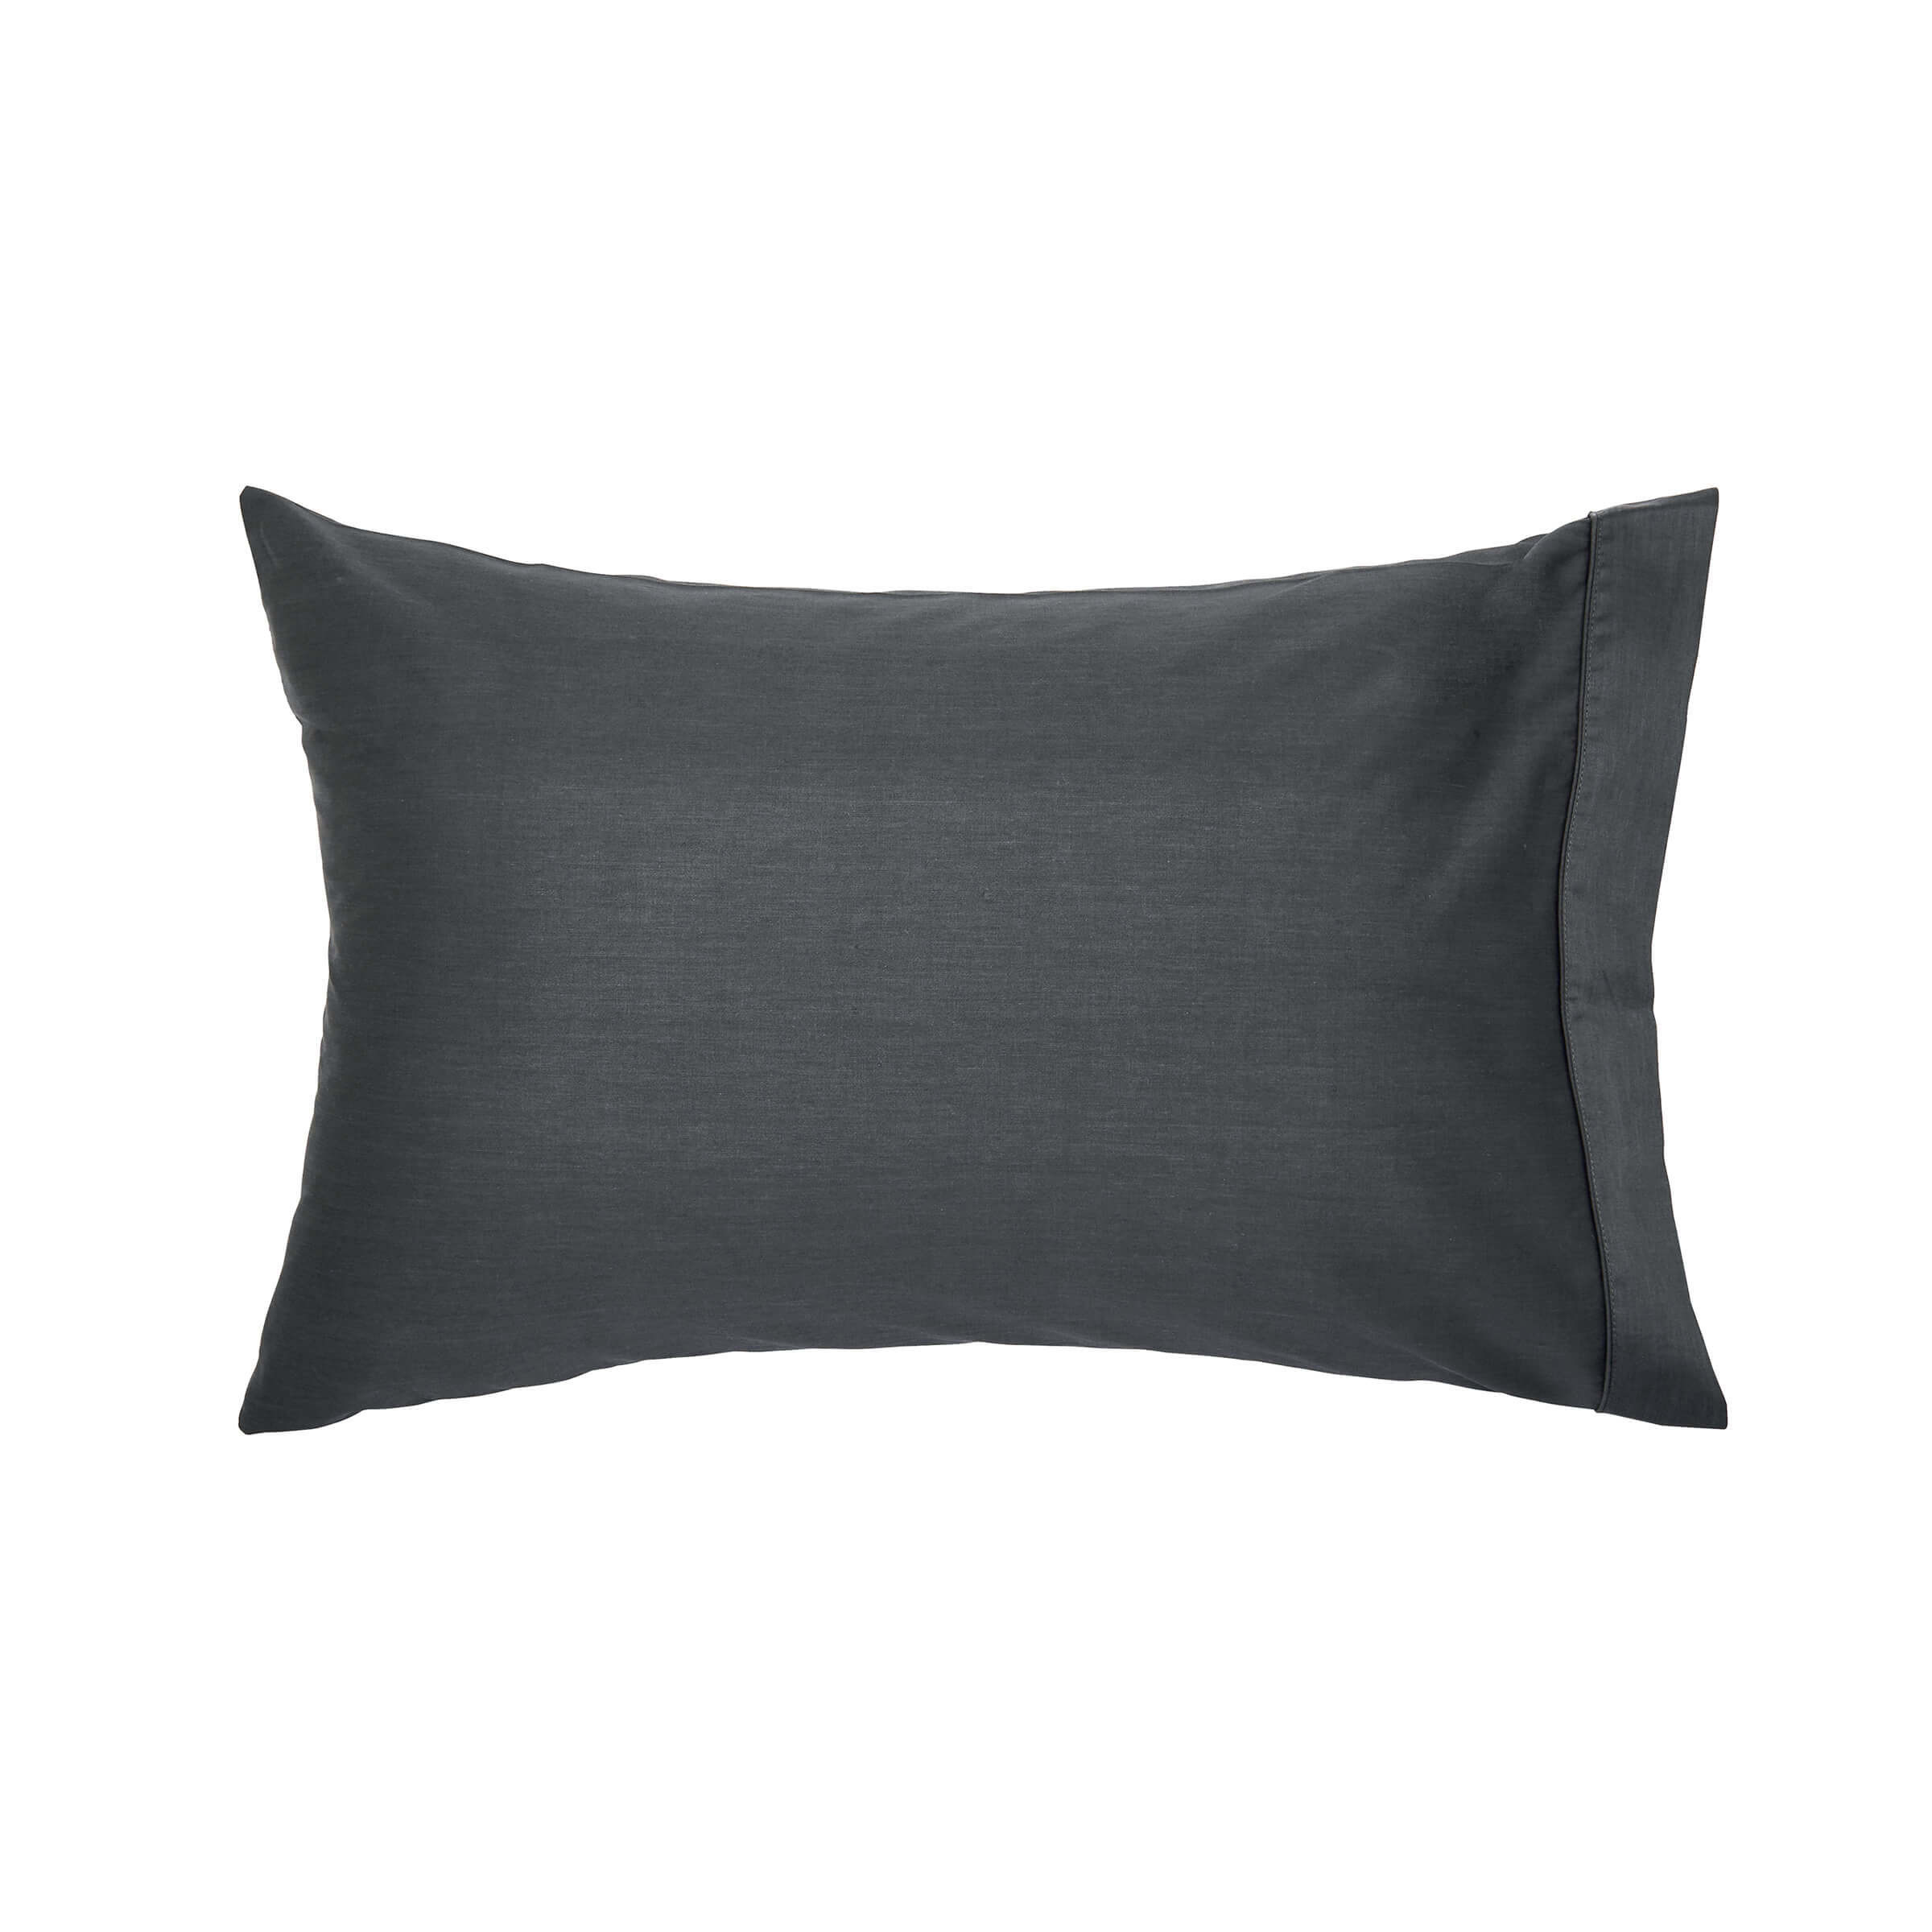 Zoffany Richmond Park Standard Pillowcase, Bone Black - image 1